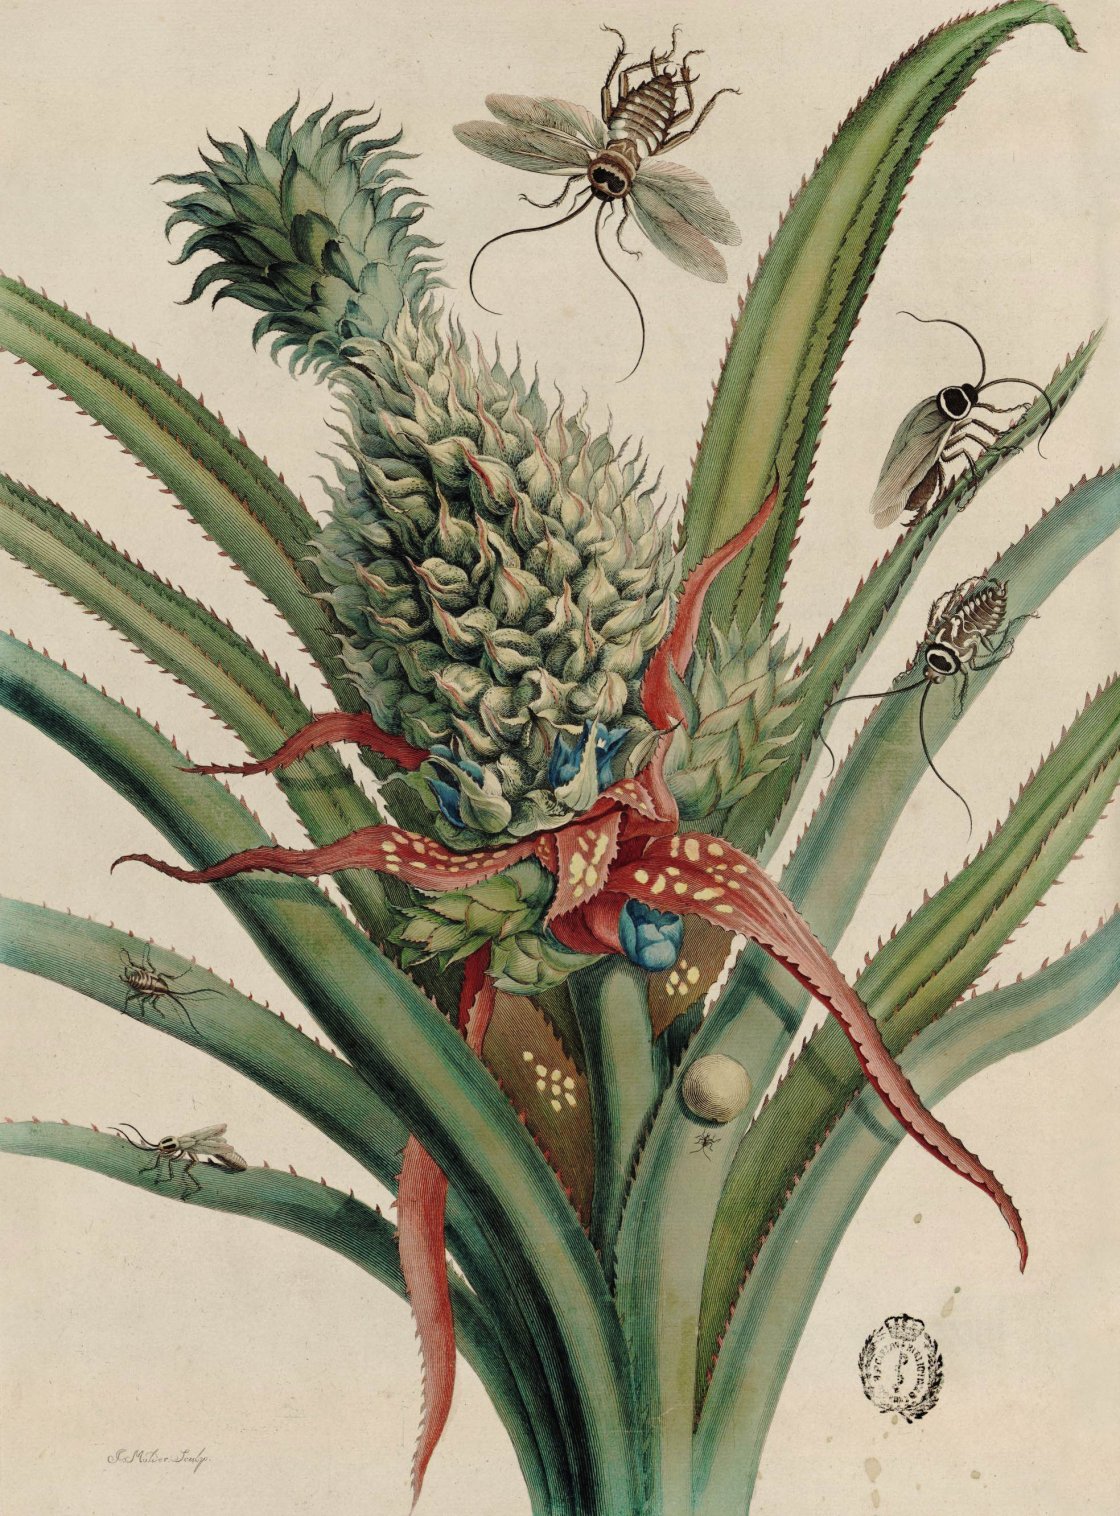 Maria Sibylla Merian. Dissertation sur la generation et les transformations des insectes de Surinam, La Haya, 1726